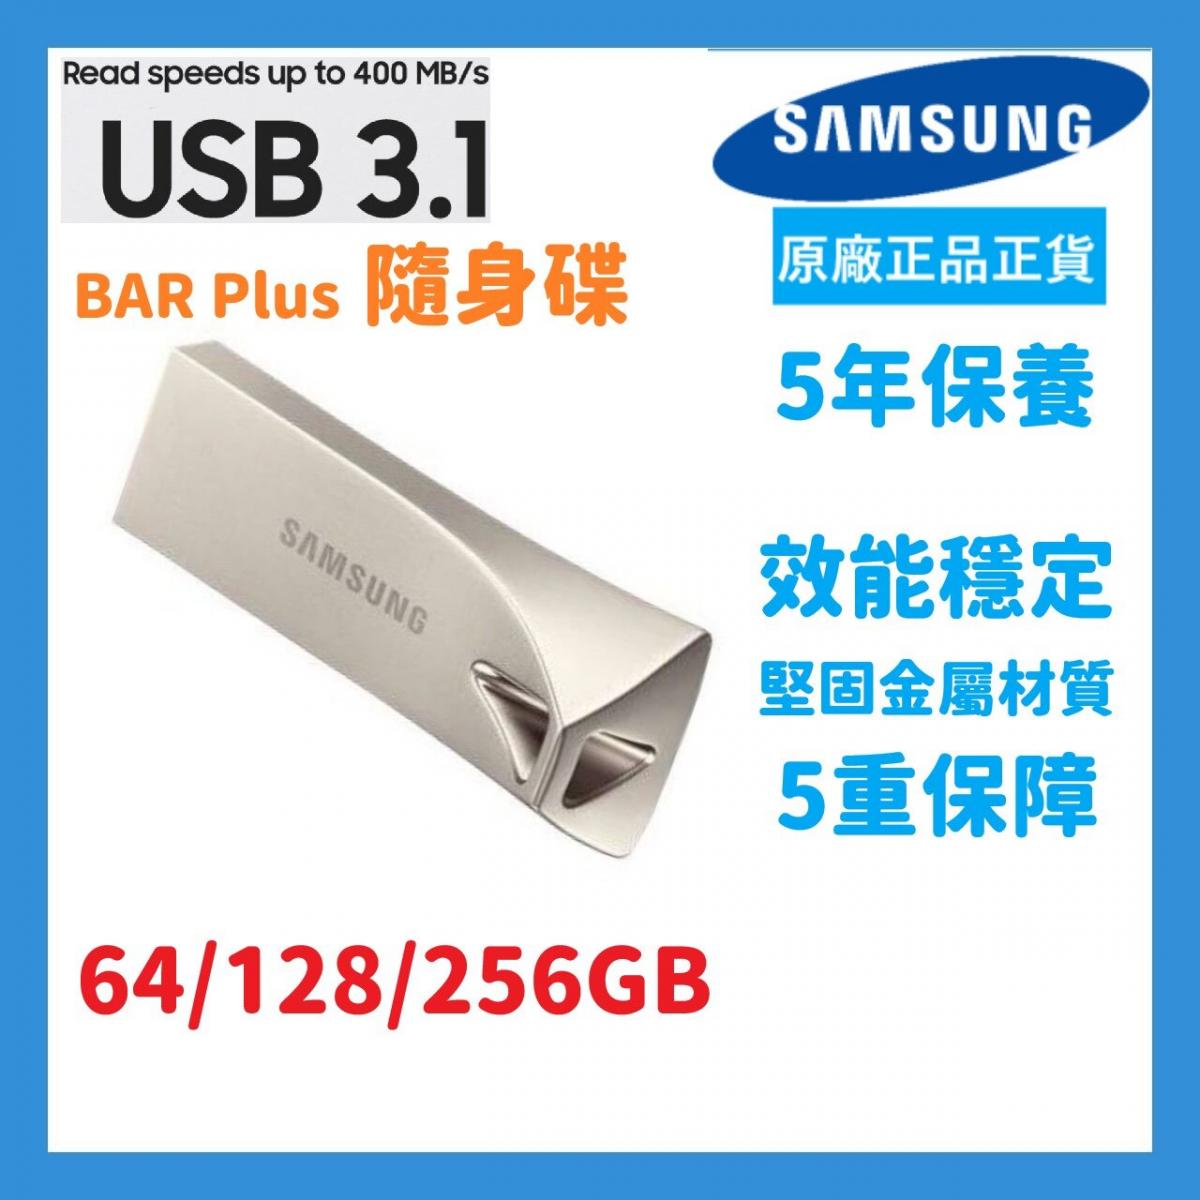 64GB Bar Plus USB 3.1 手指/隨身碟 (Silver) (MUF-64BE3/APC) -【原裝正貨】